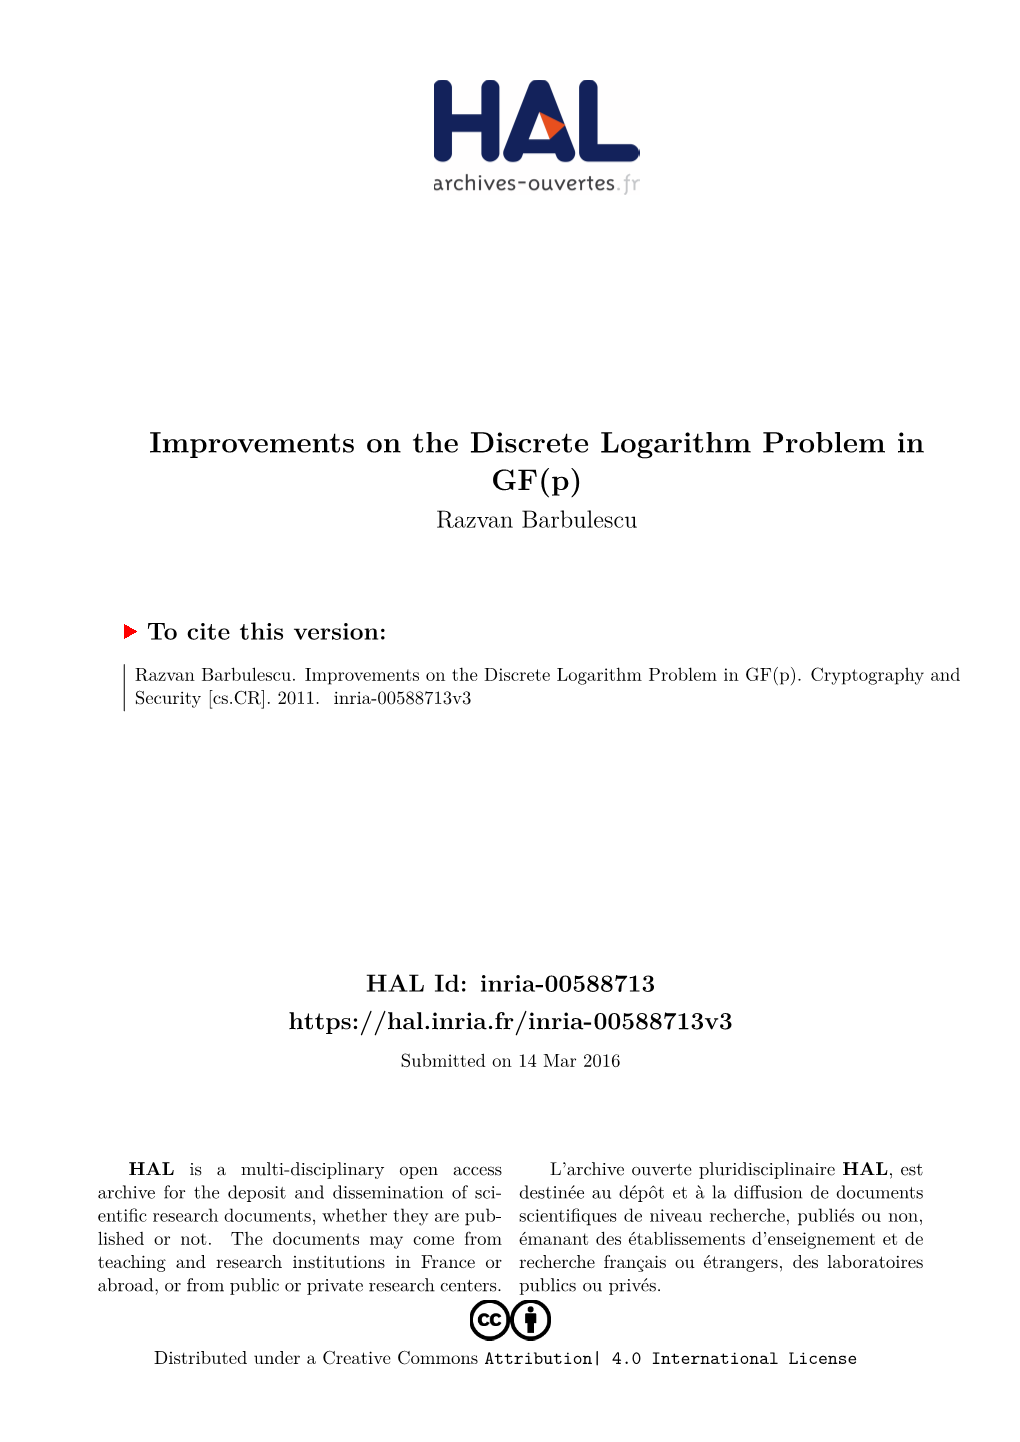 Improvements on the Discrete Logarithm Problem in GF(P) Razvan Barbulescu